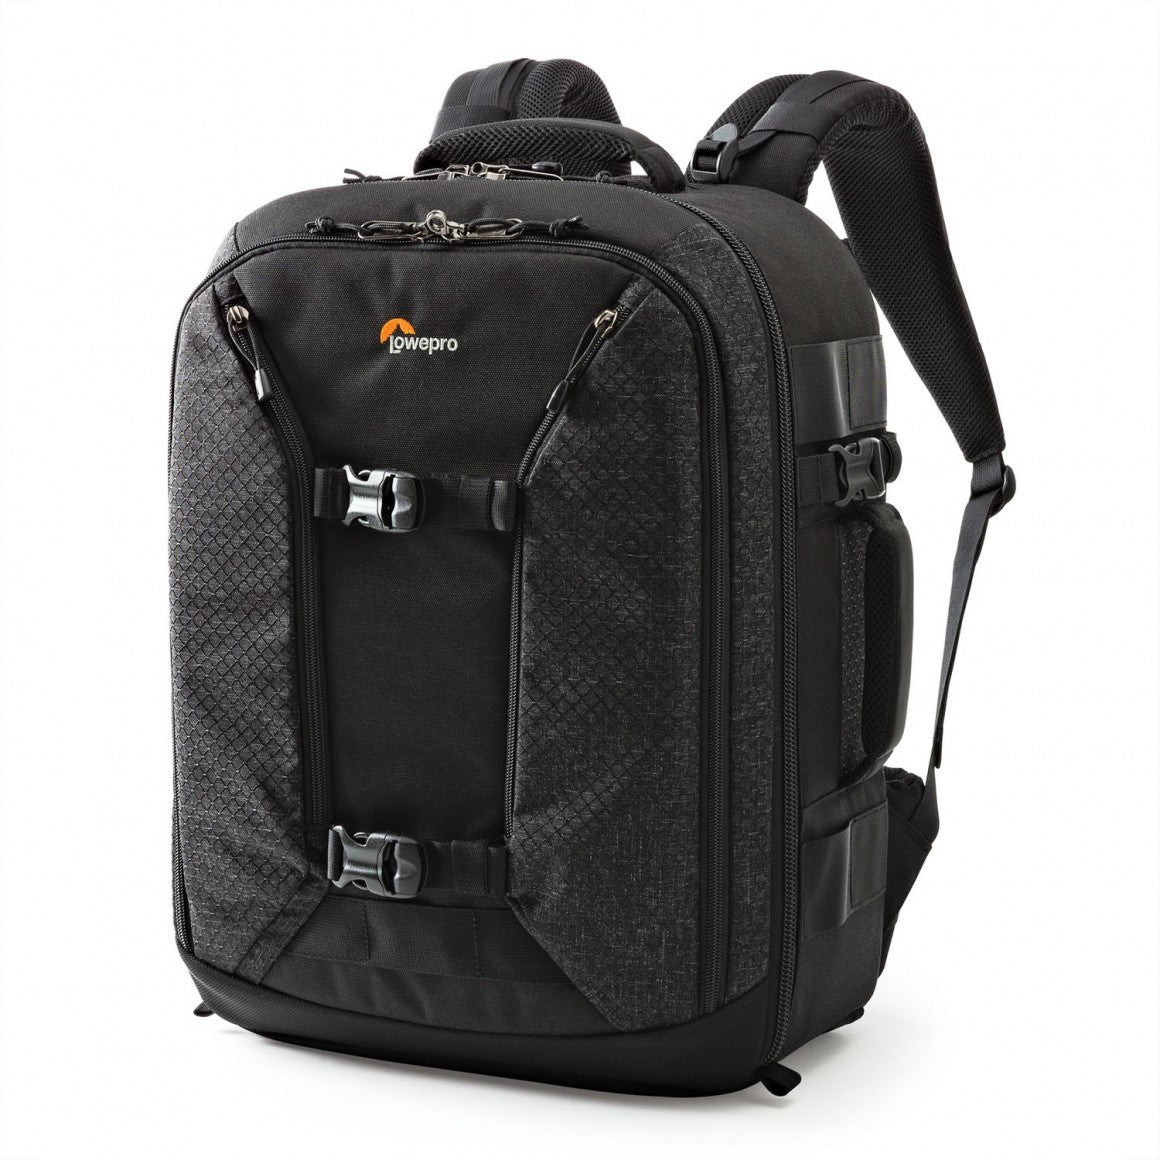 Lowepro Pro Runner 450 AW II Backpack (Black), bags backpacks, Lowepro - Pictureline  - 2